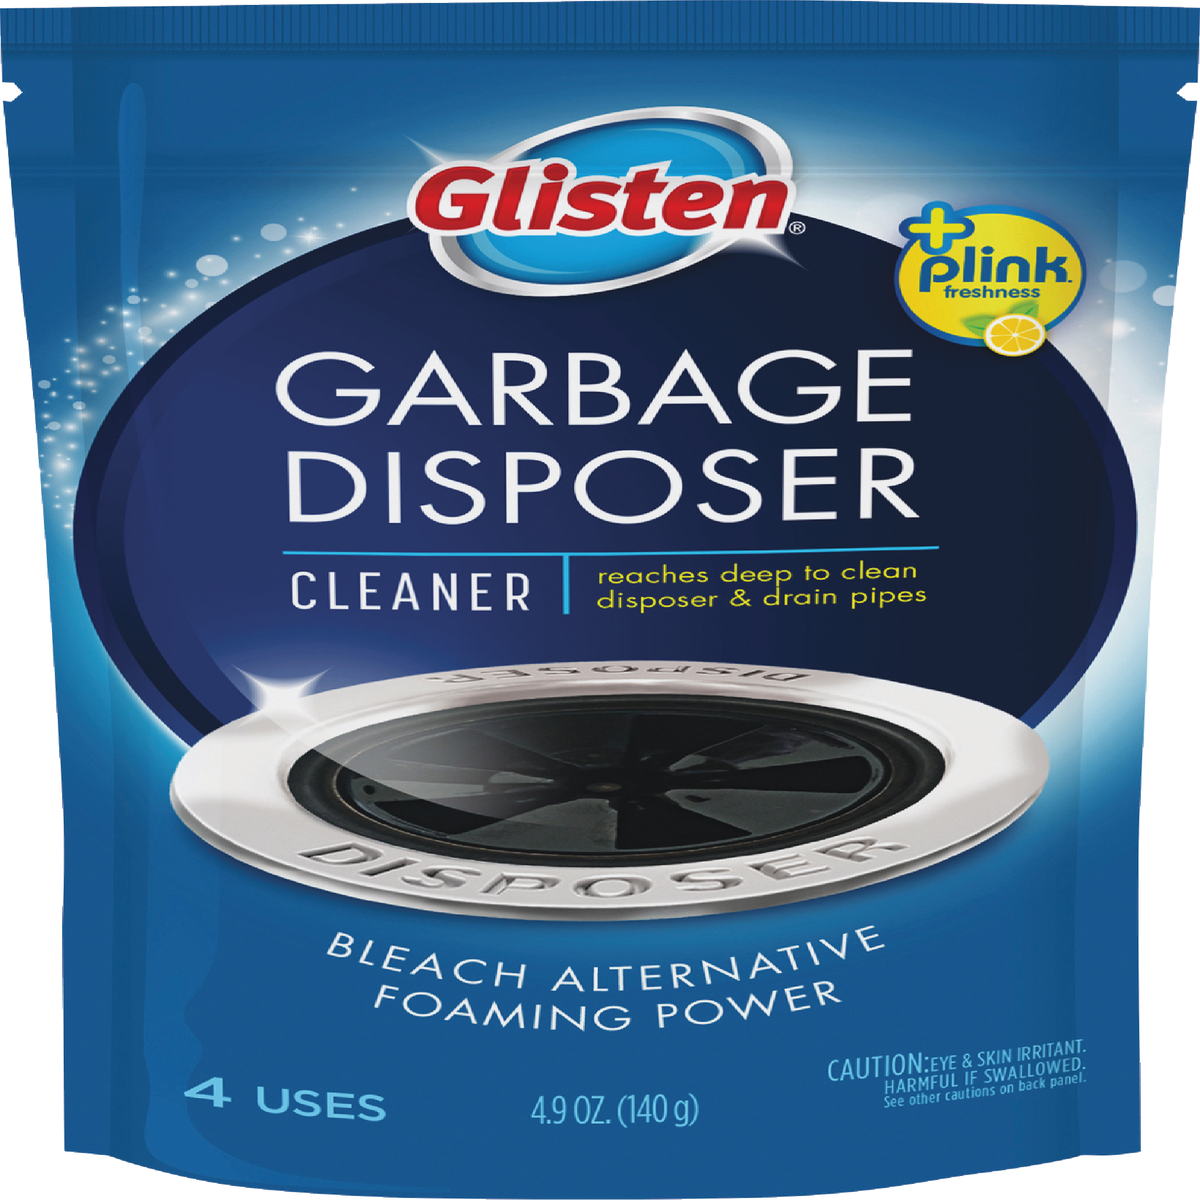 Garbage Disposer Cleaner